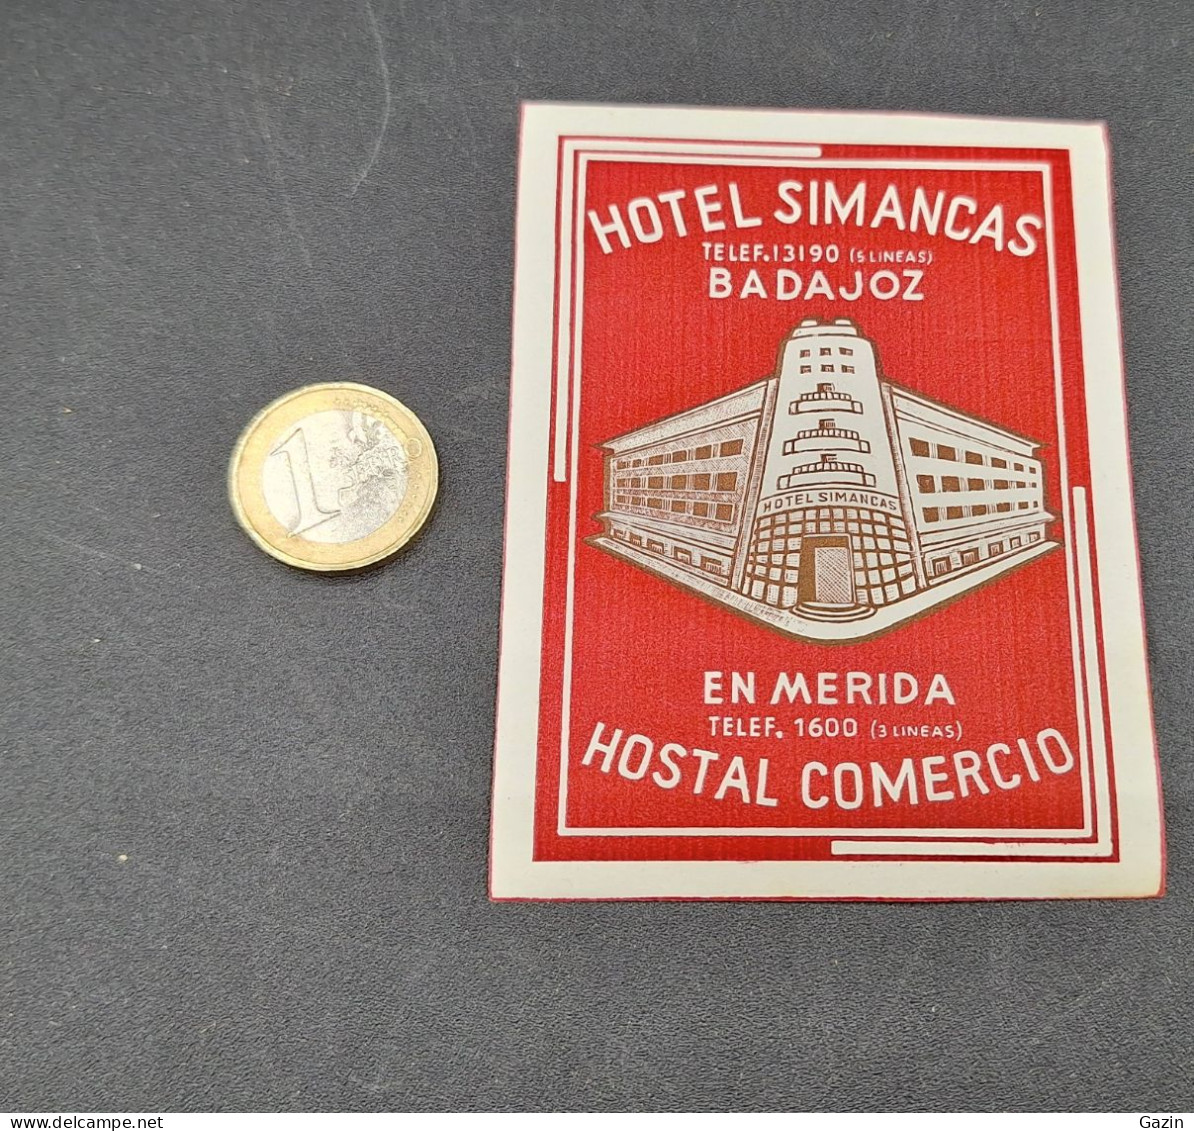 C7/3 - Hotel Simancas * Badajoz * Espana *  Luggage Lable * Rótulo * Etiqueta - Hotel Labels